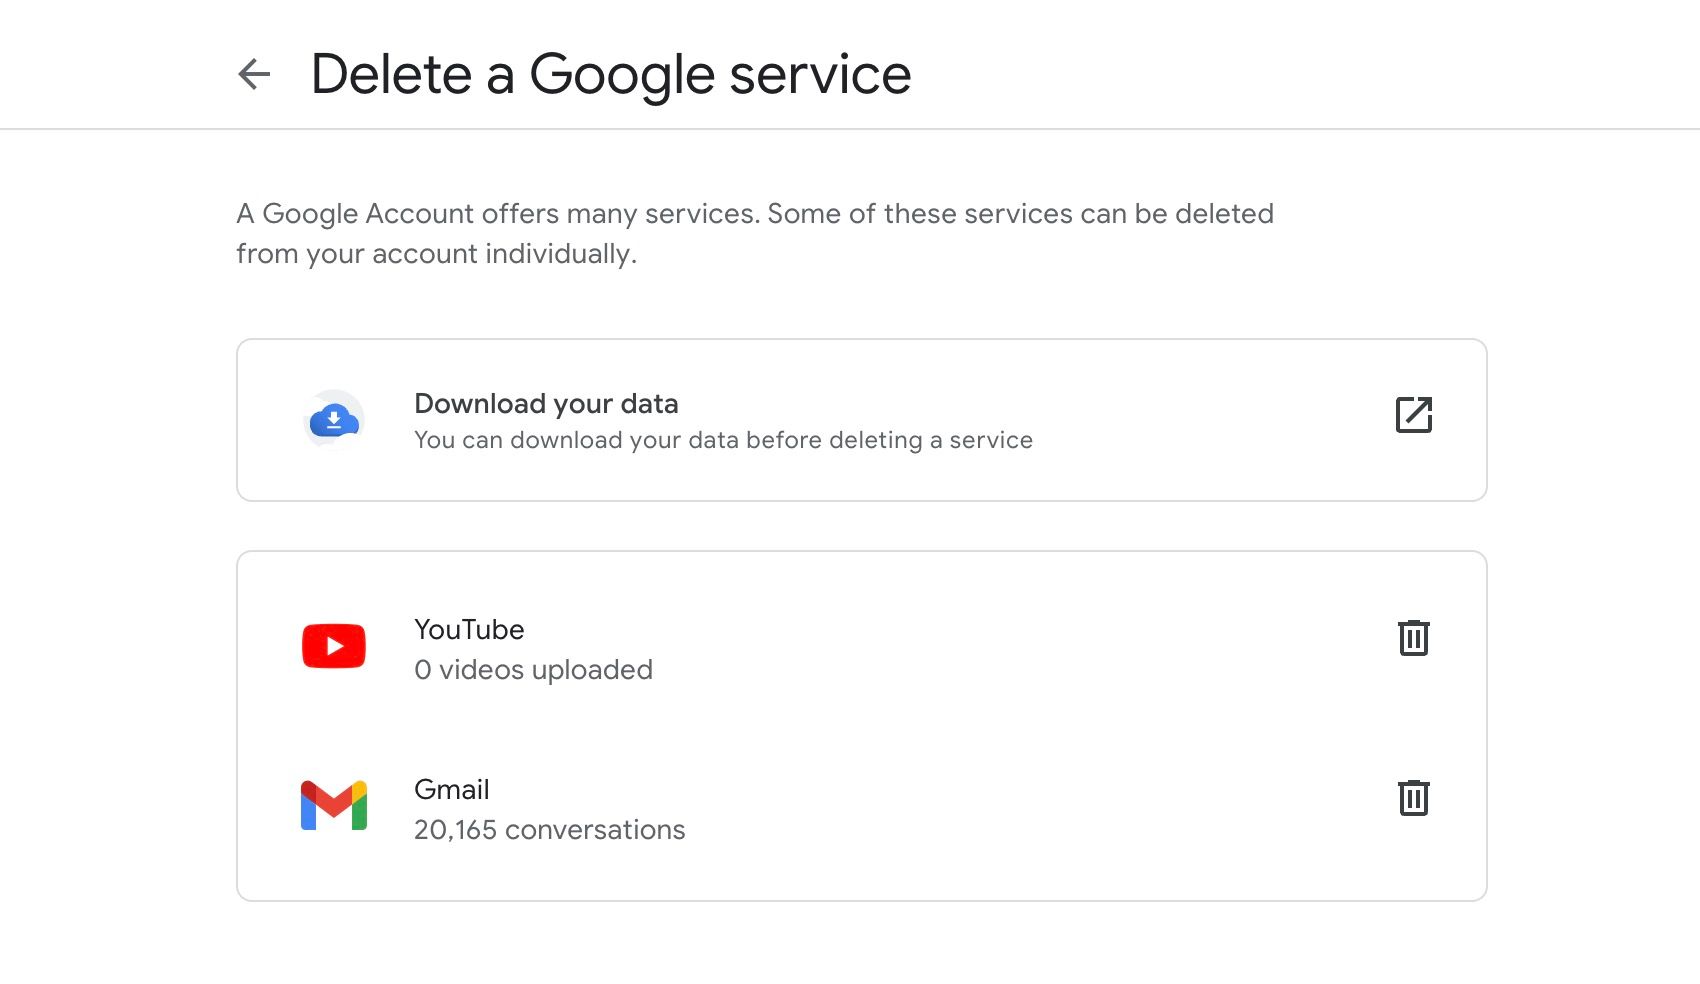 delete a google service on web